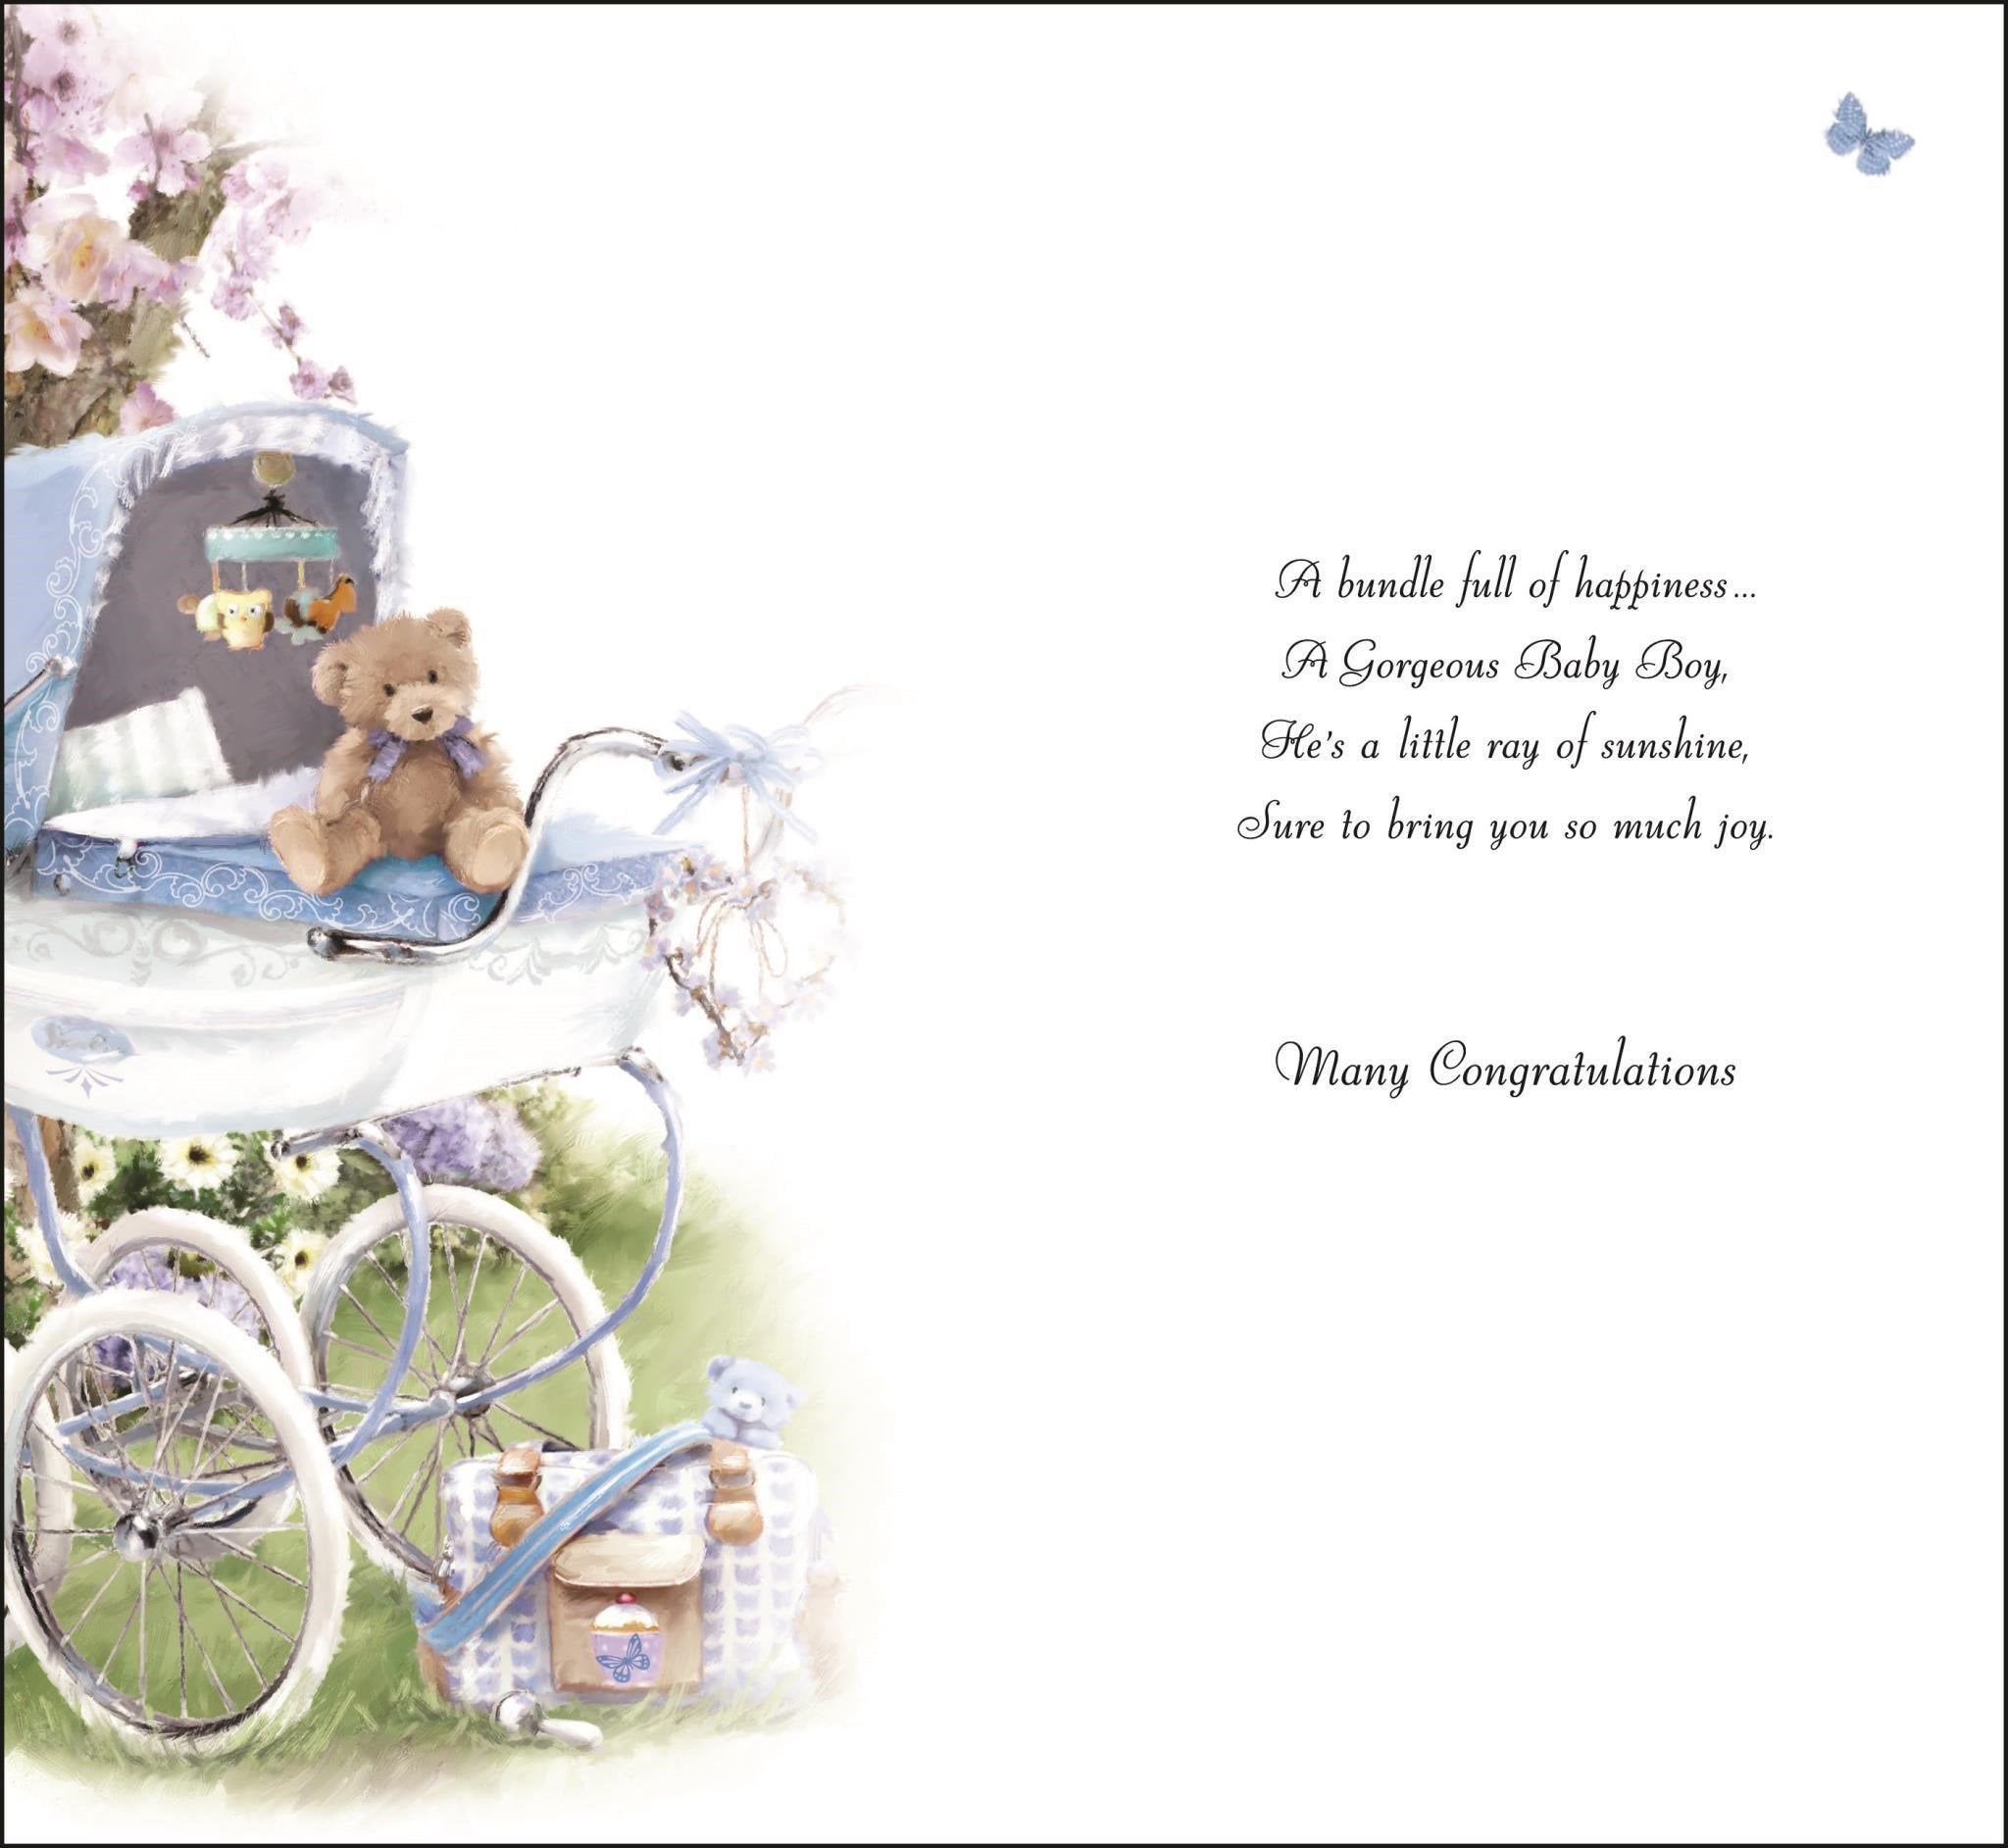 Inside of New Baby Boy Pram Greetings Card